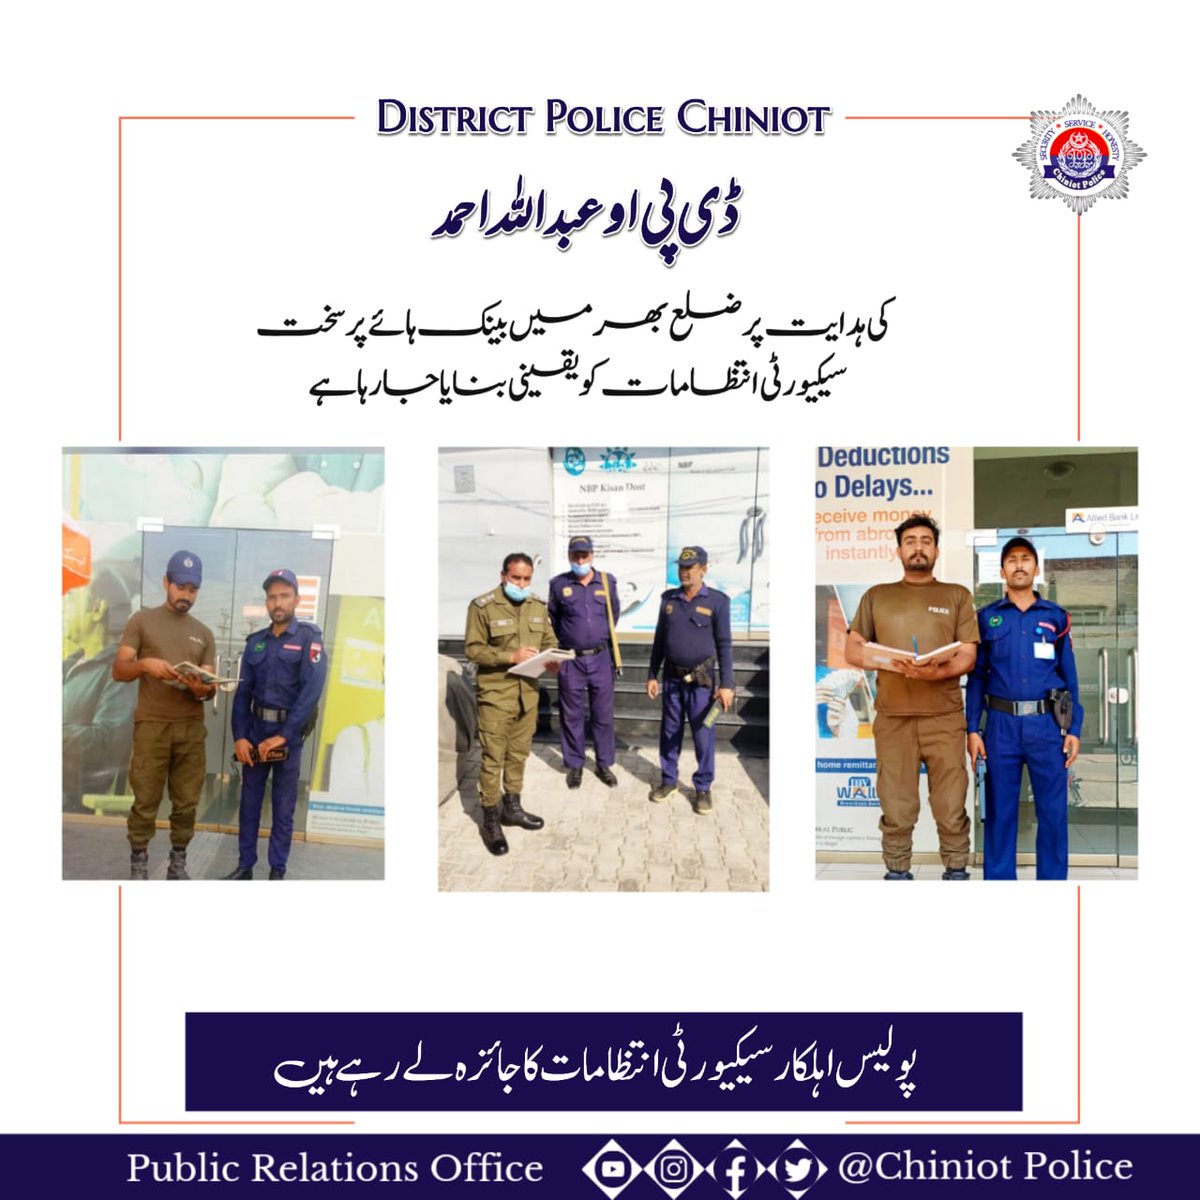 #PunjabPolice #ChiniotPolice #AtYourService